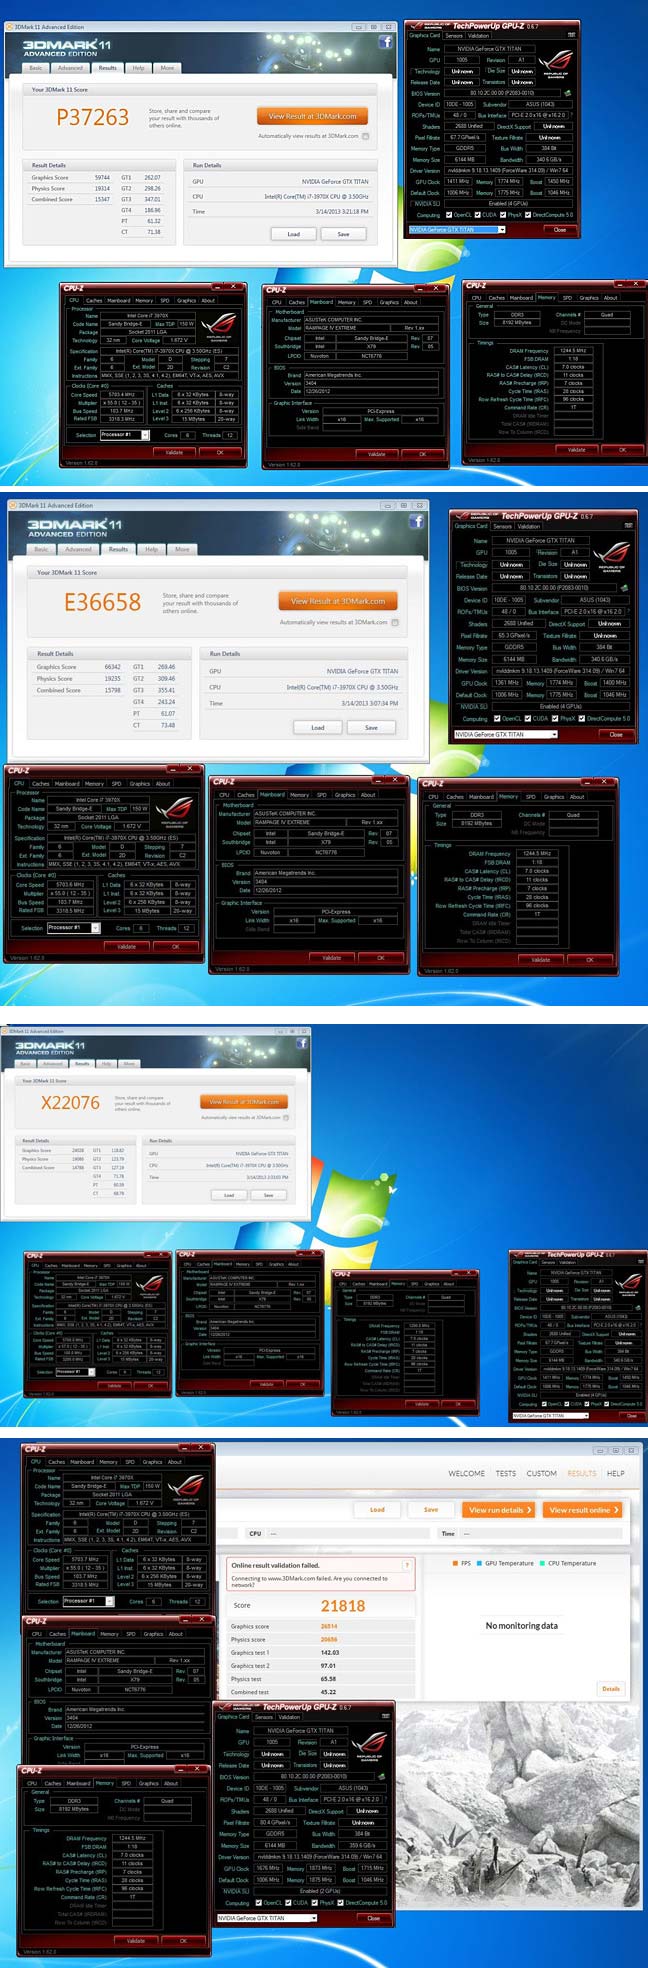 ASUS GeForce GTX Titan ставит рекорды в 3DMark